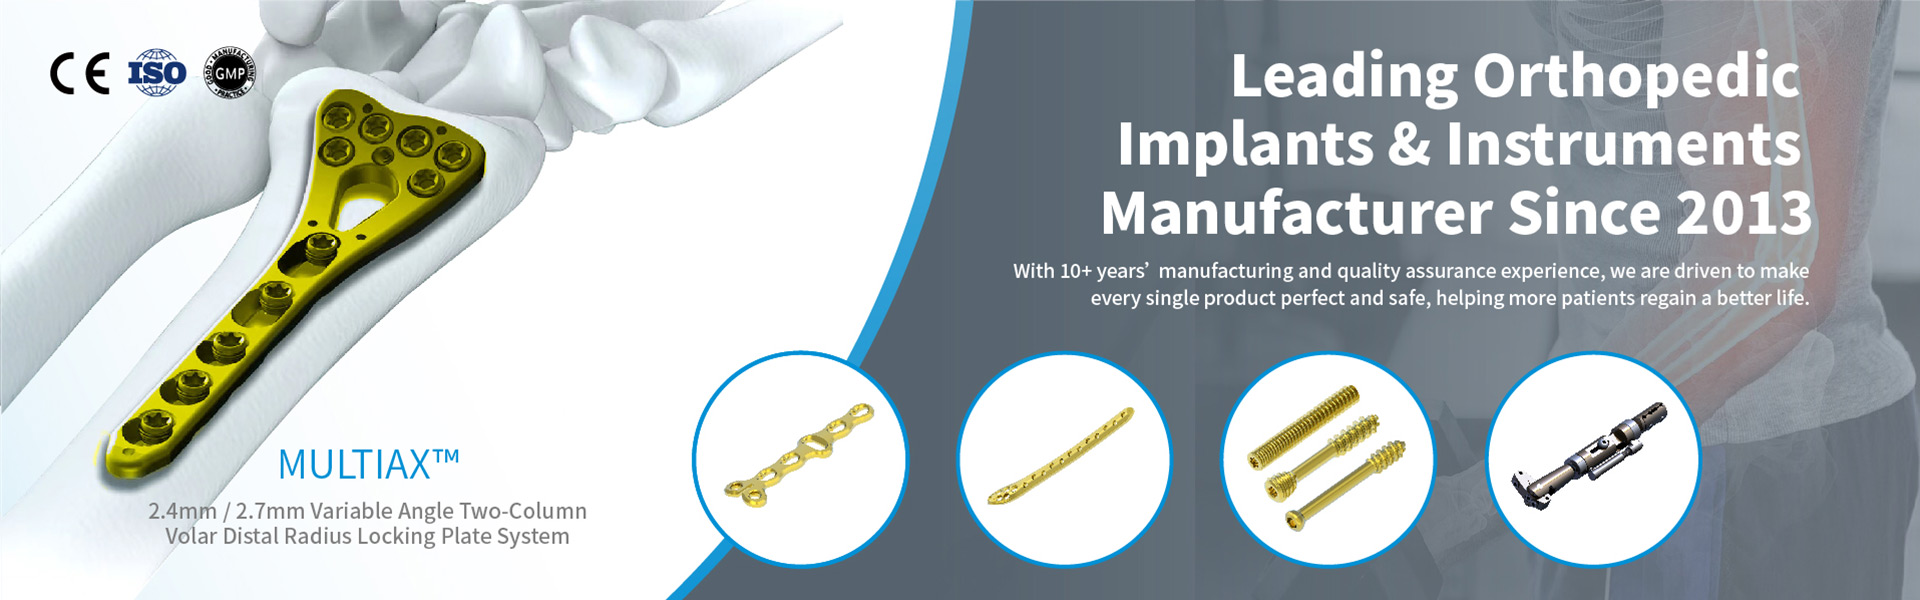 Leading orthopedic implants & instruments manufacturer since 2013